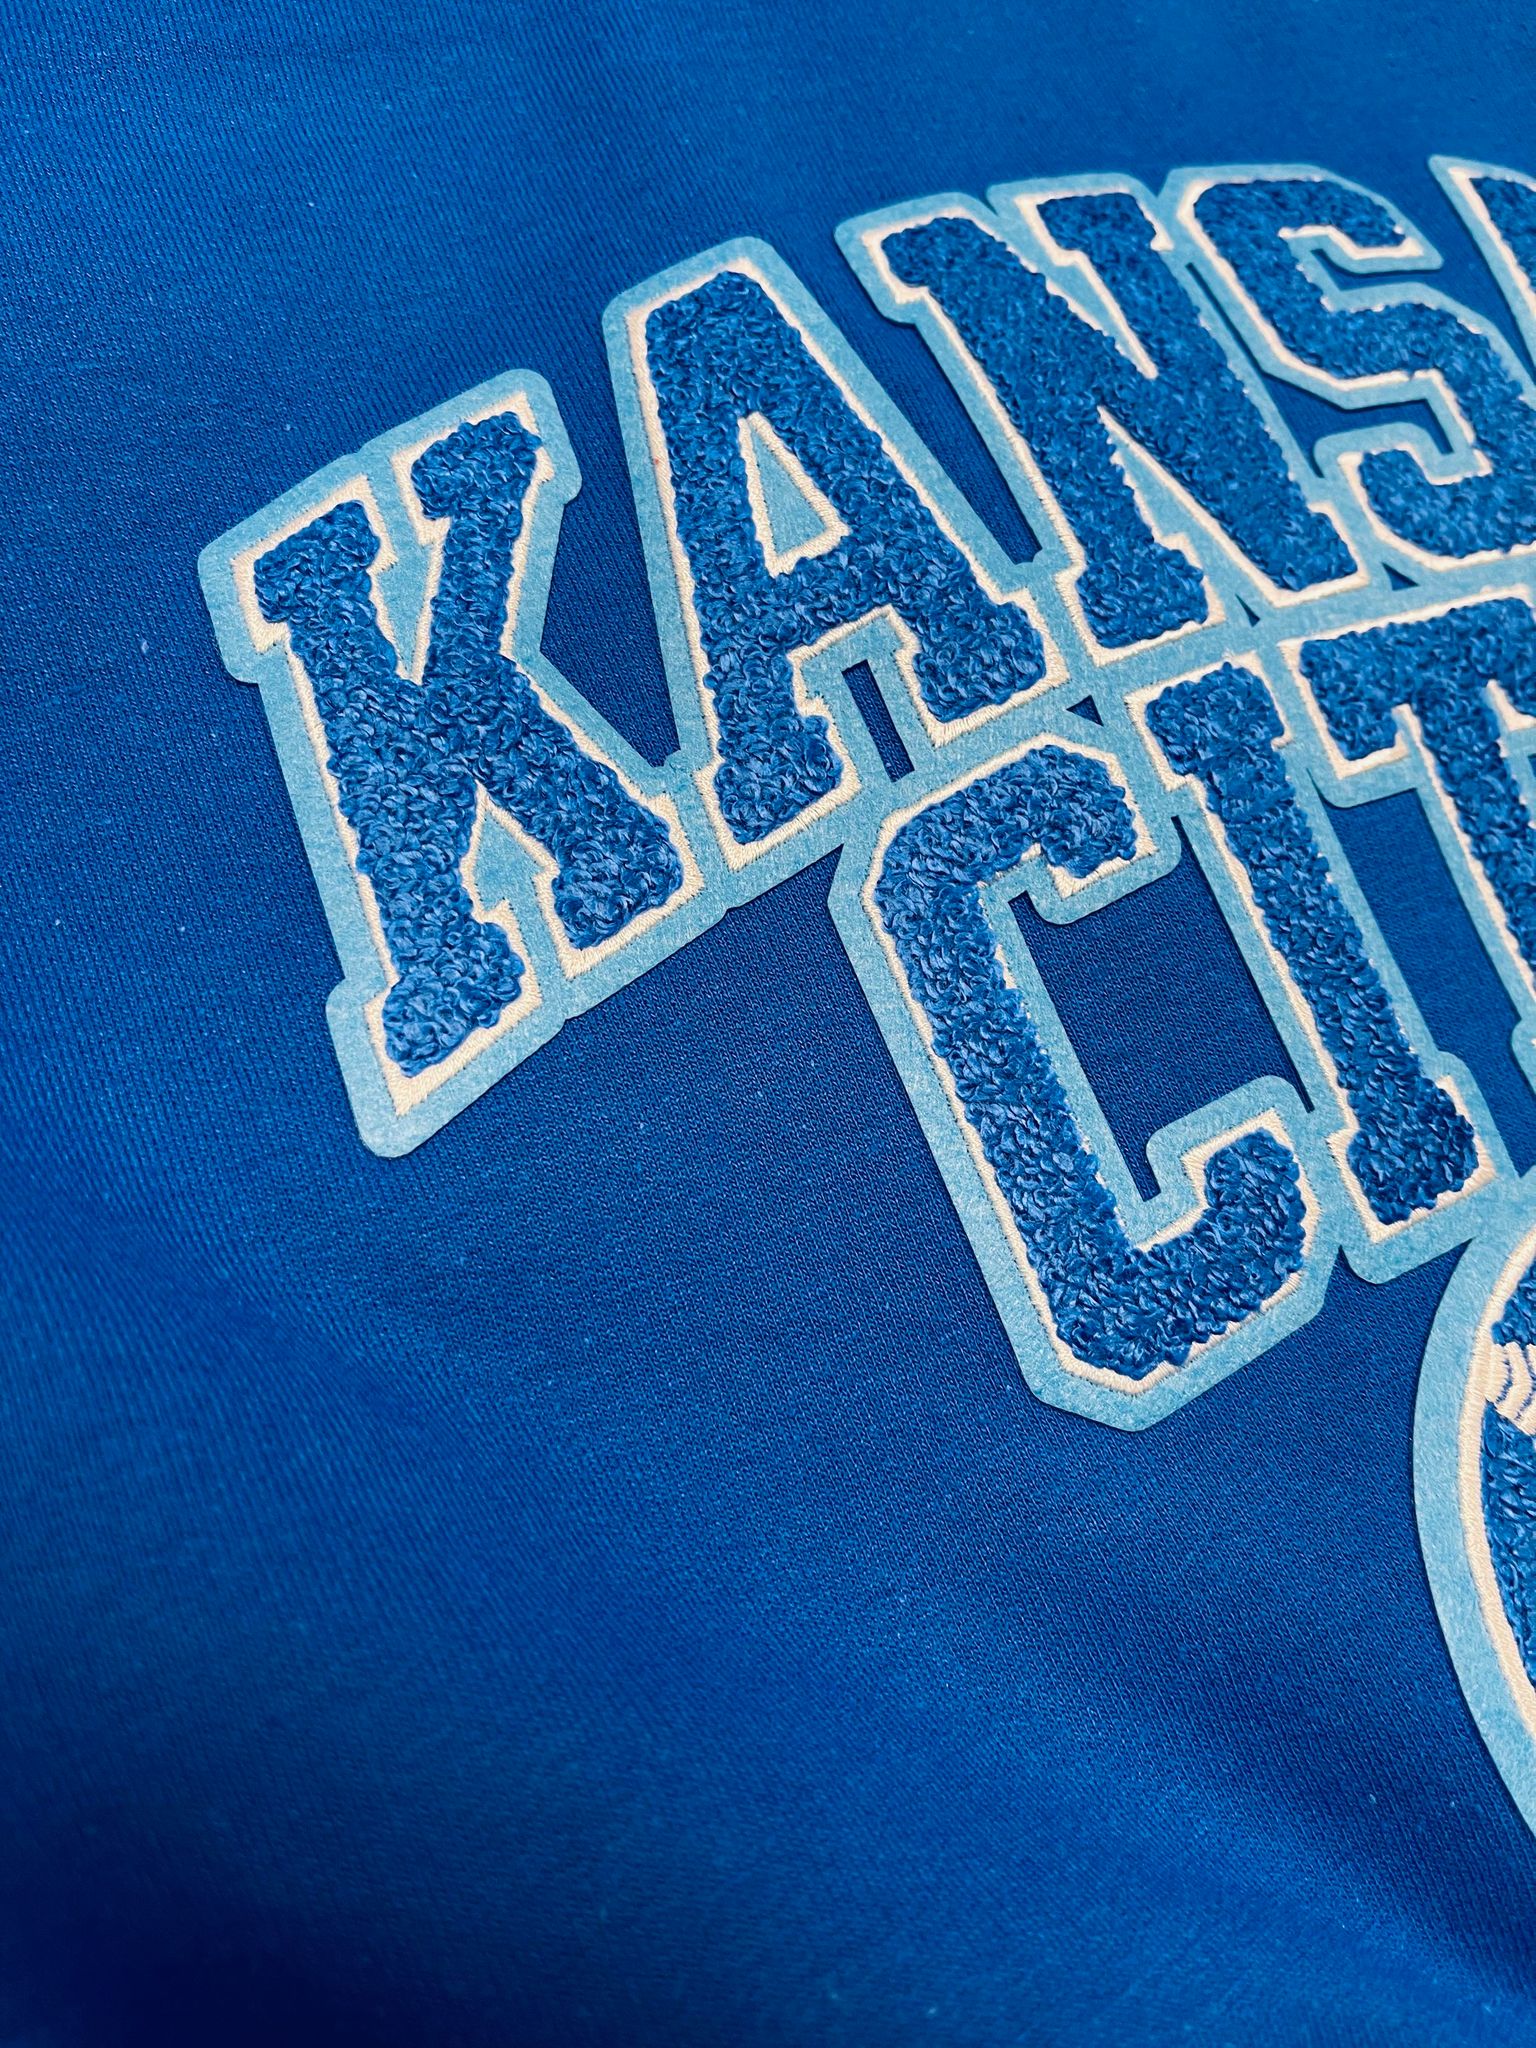 Custom Kansas City Baseball Chenille Patch on Crewneck Sweatshirt - The Red Rival